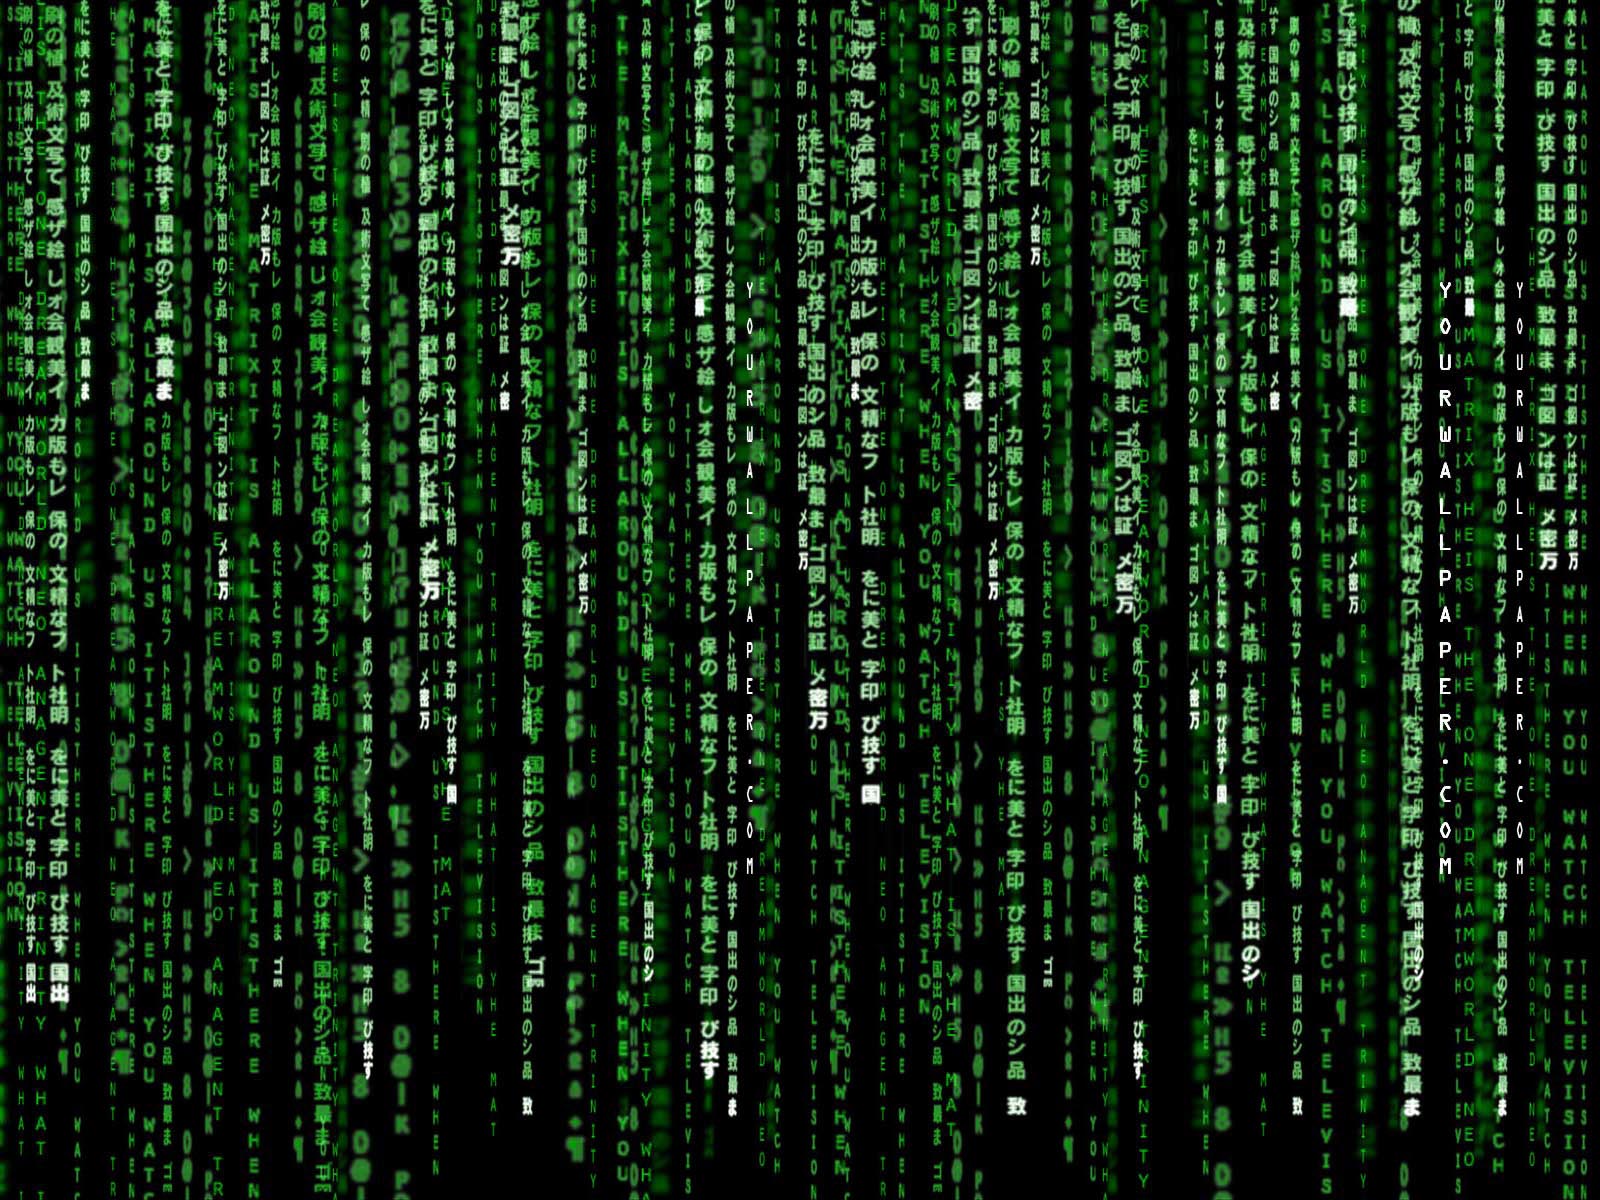 The Matrix Full HD Widescreen wallpapers for desktop